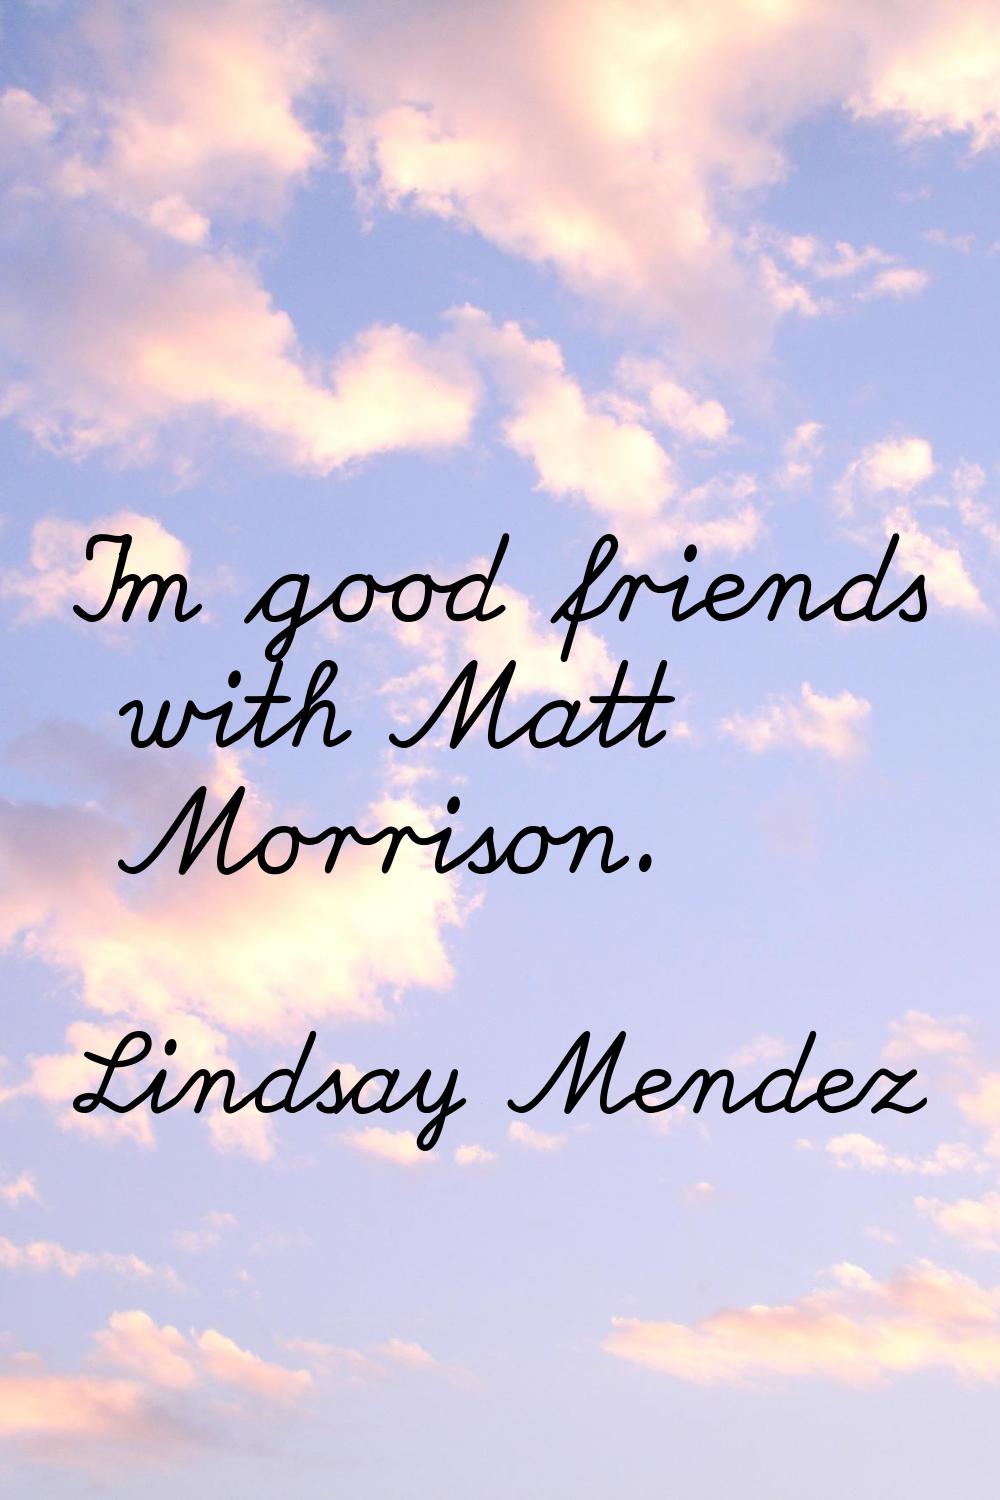 I'm good friends with Matt Morrison.